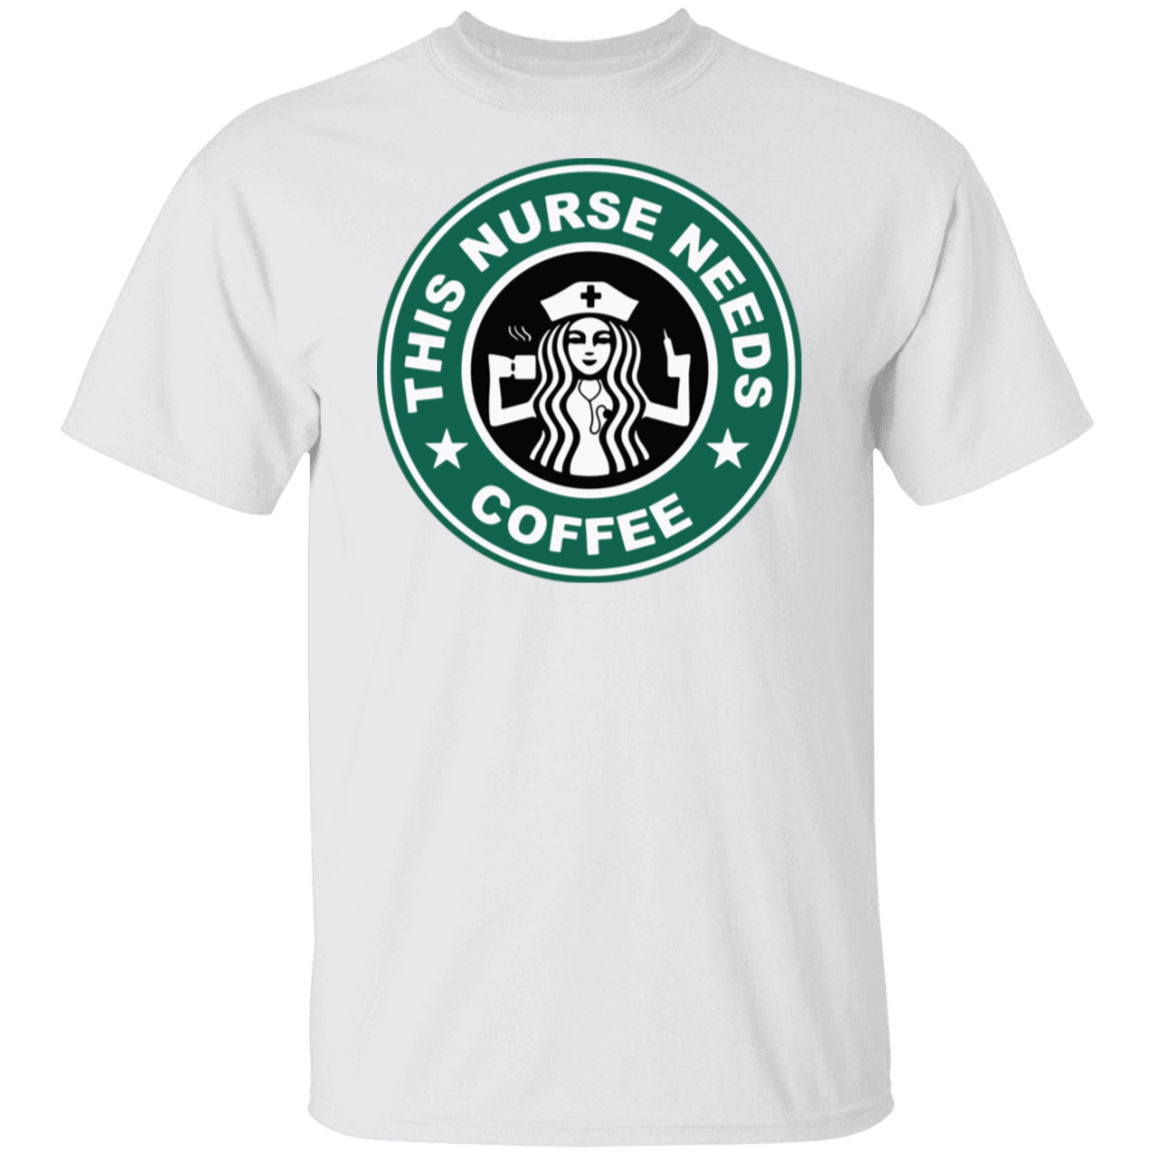 This Nurse Needs Coffee T-Shirt